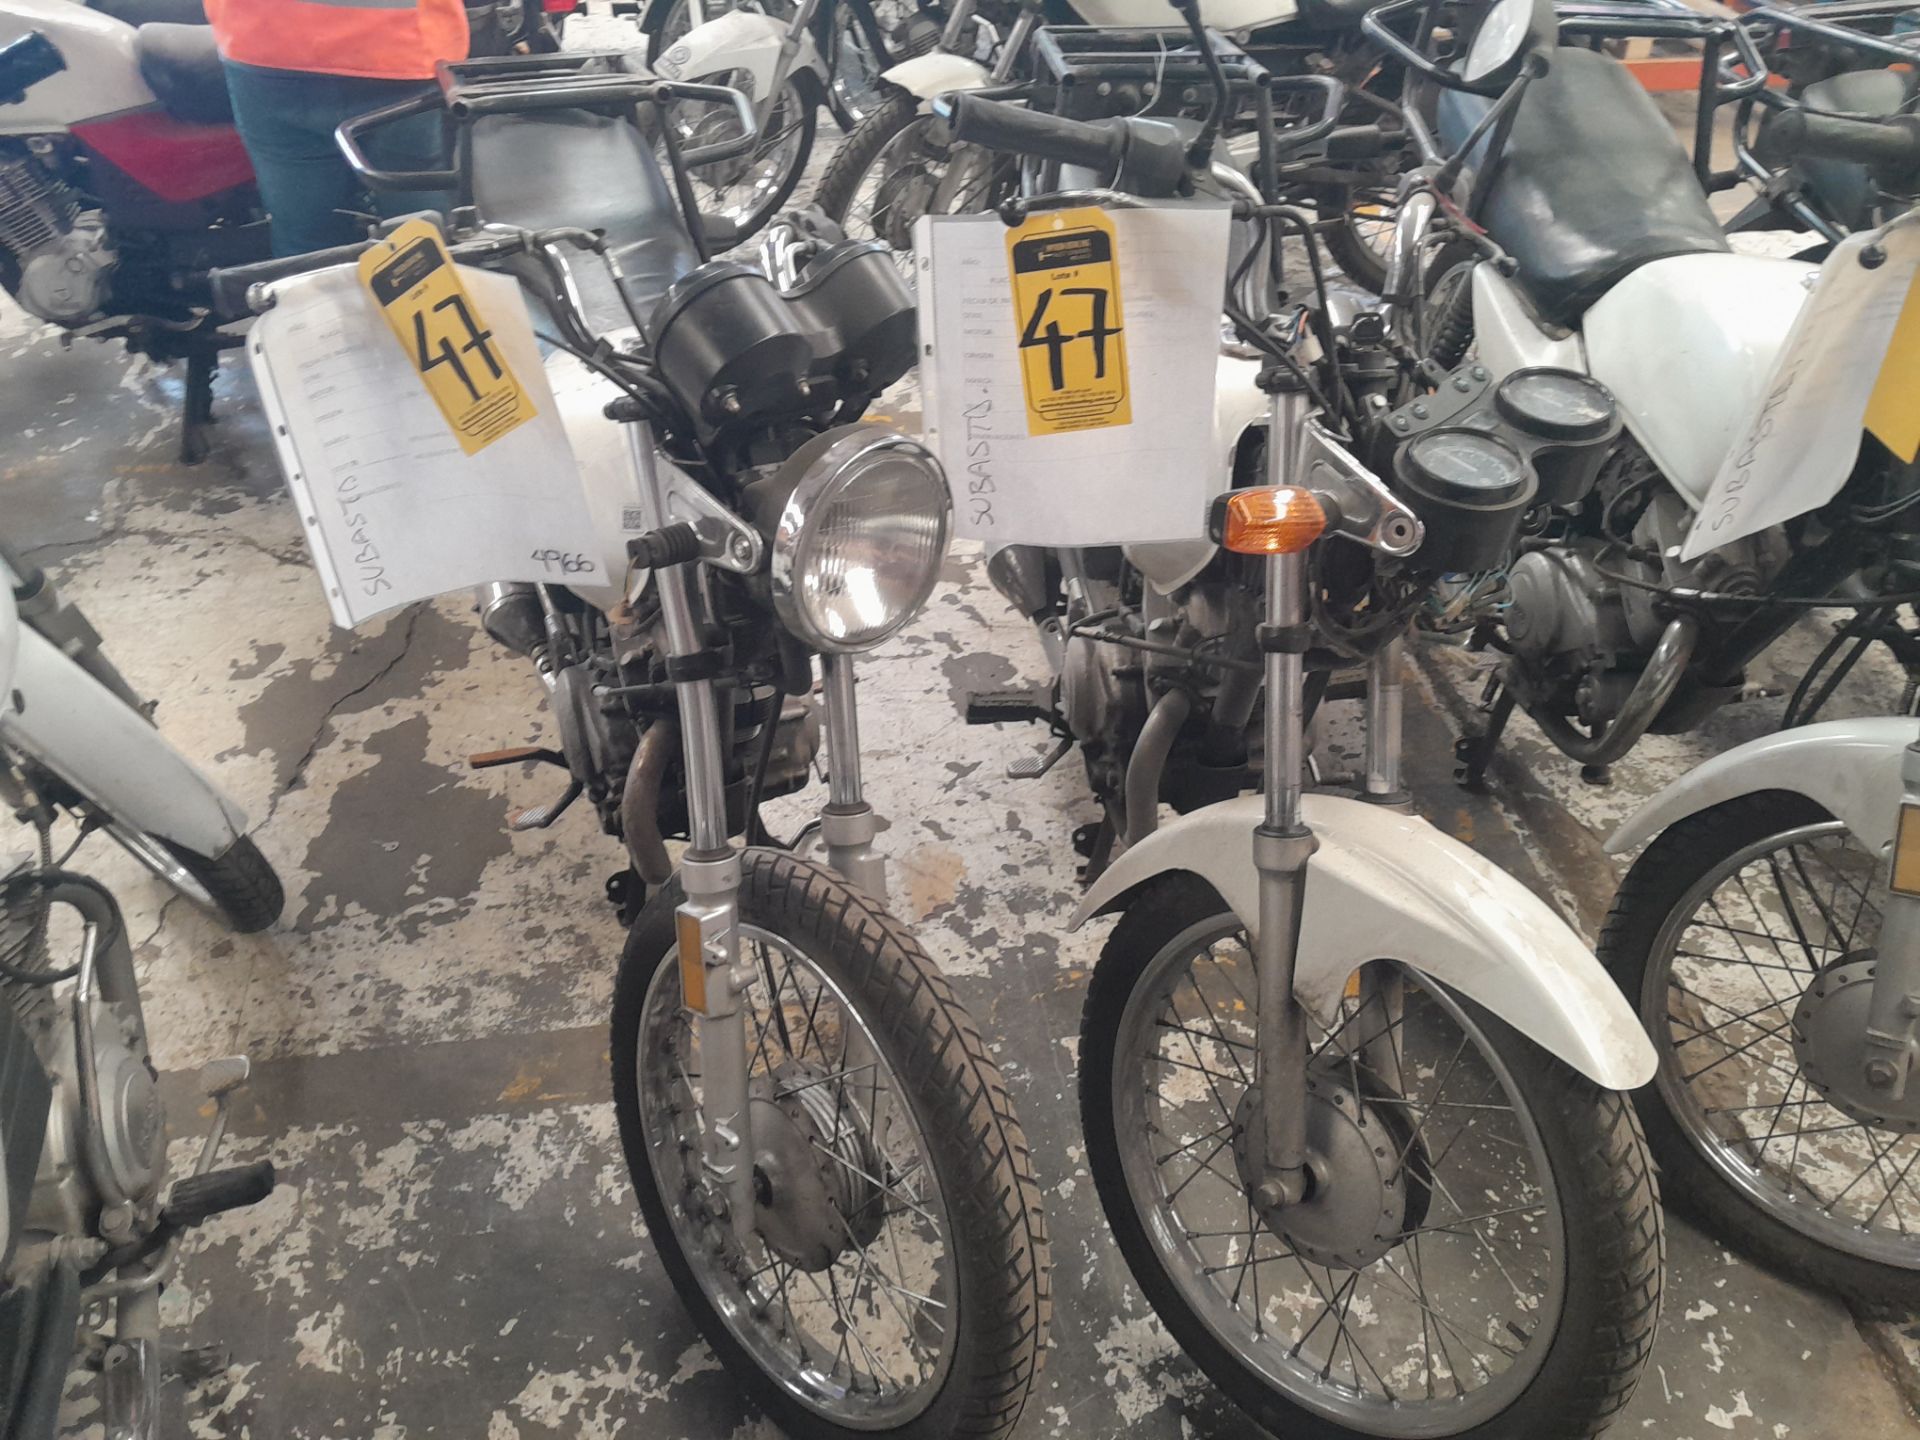 Lote de 2 Motocicletas contiene: 1 Motocicleta de trabajo usada Marca Yamaha YB 125, Modelo 2015, N